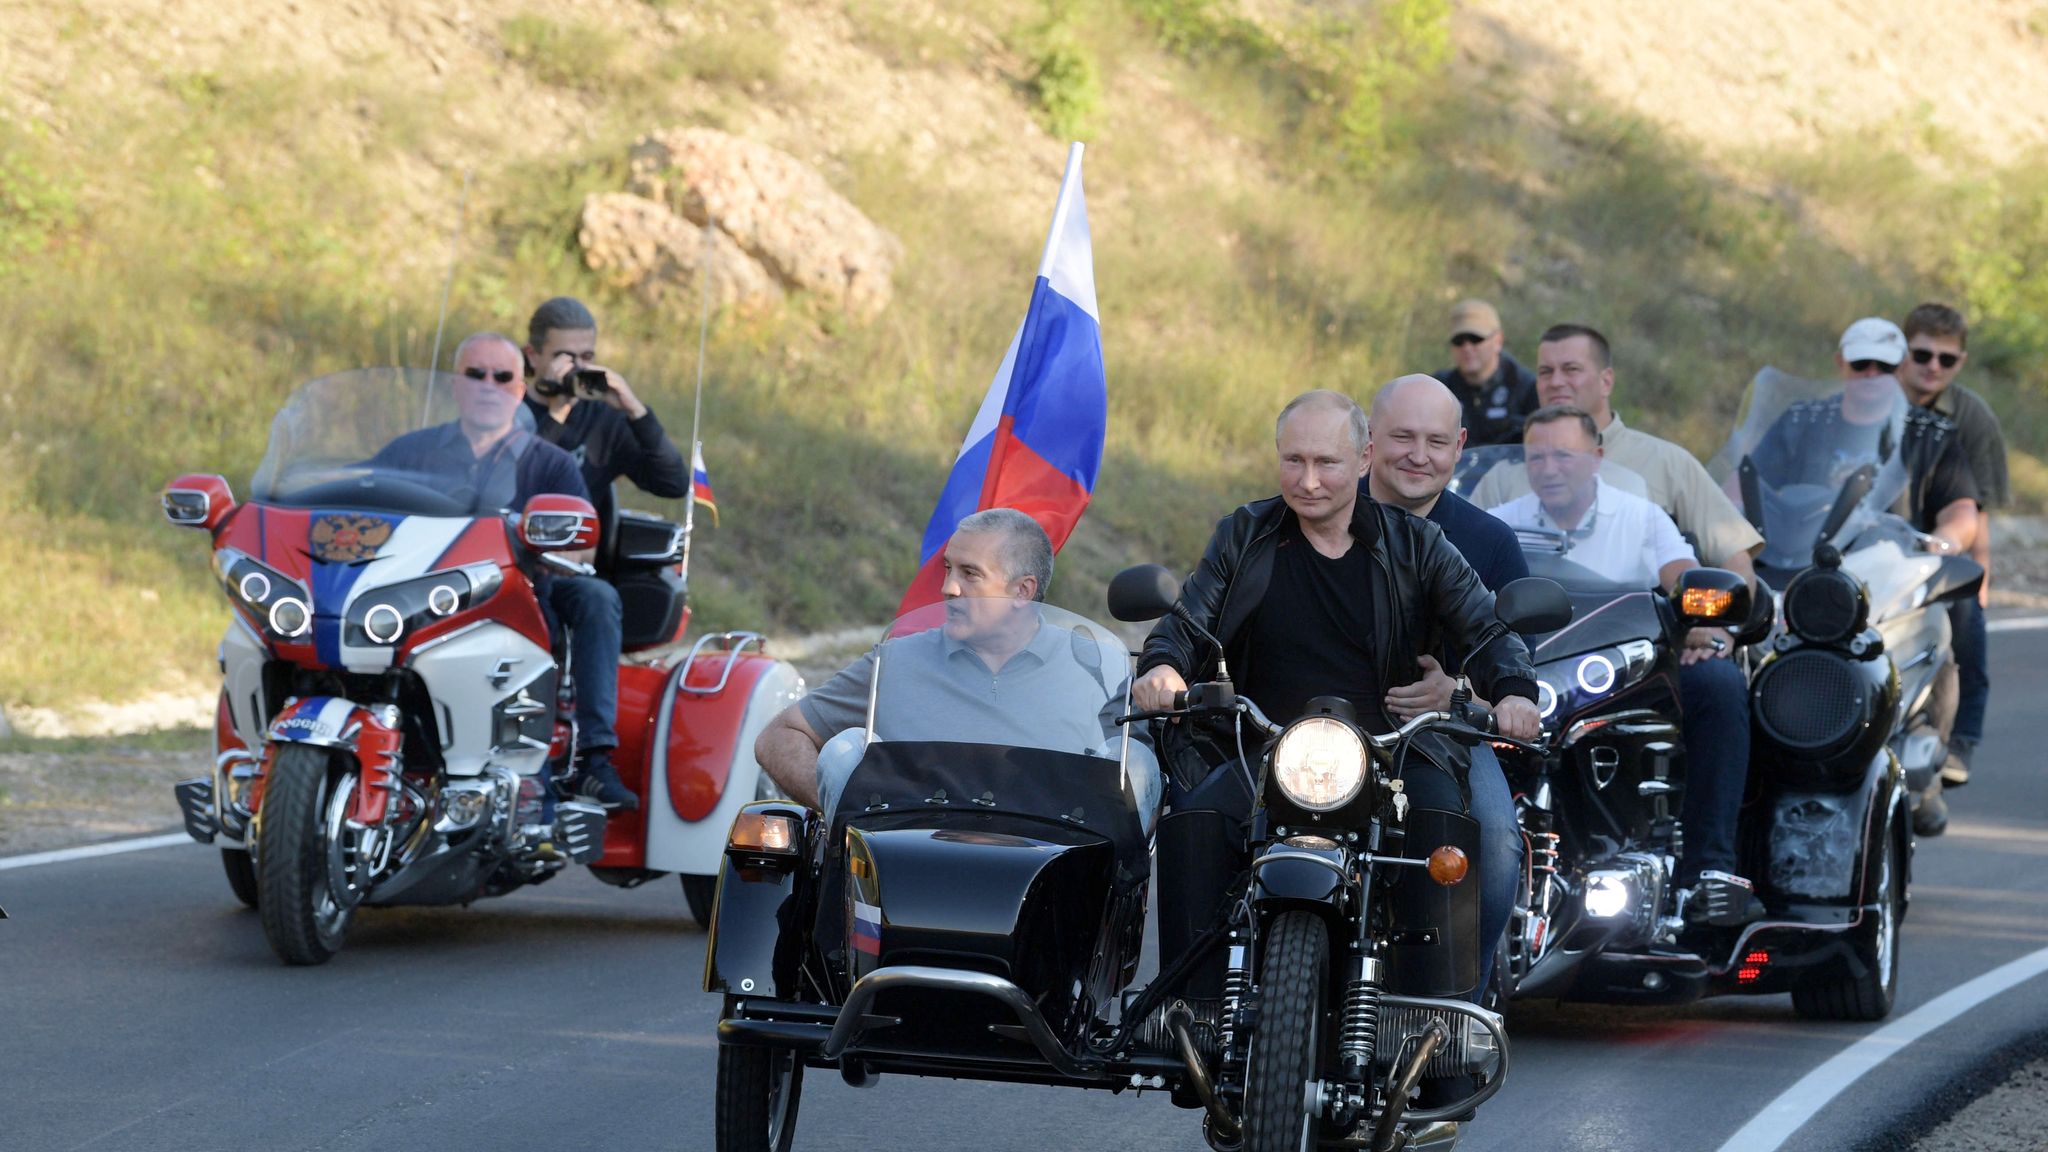 Russia Putin Attends Biker Show In Crimea As Thousands Protest In